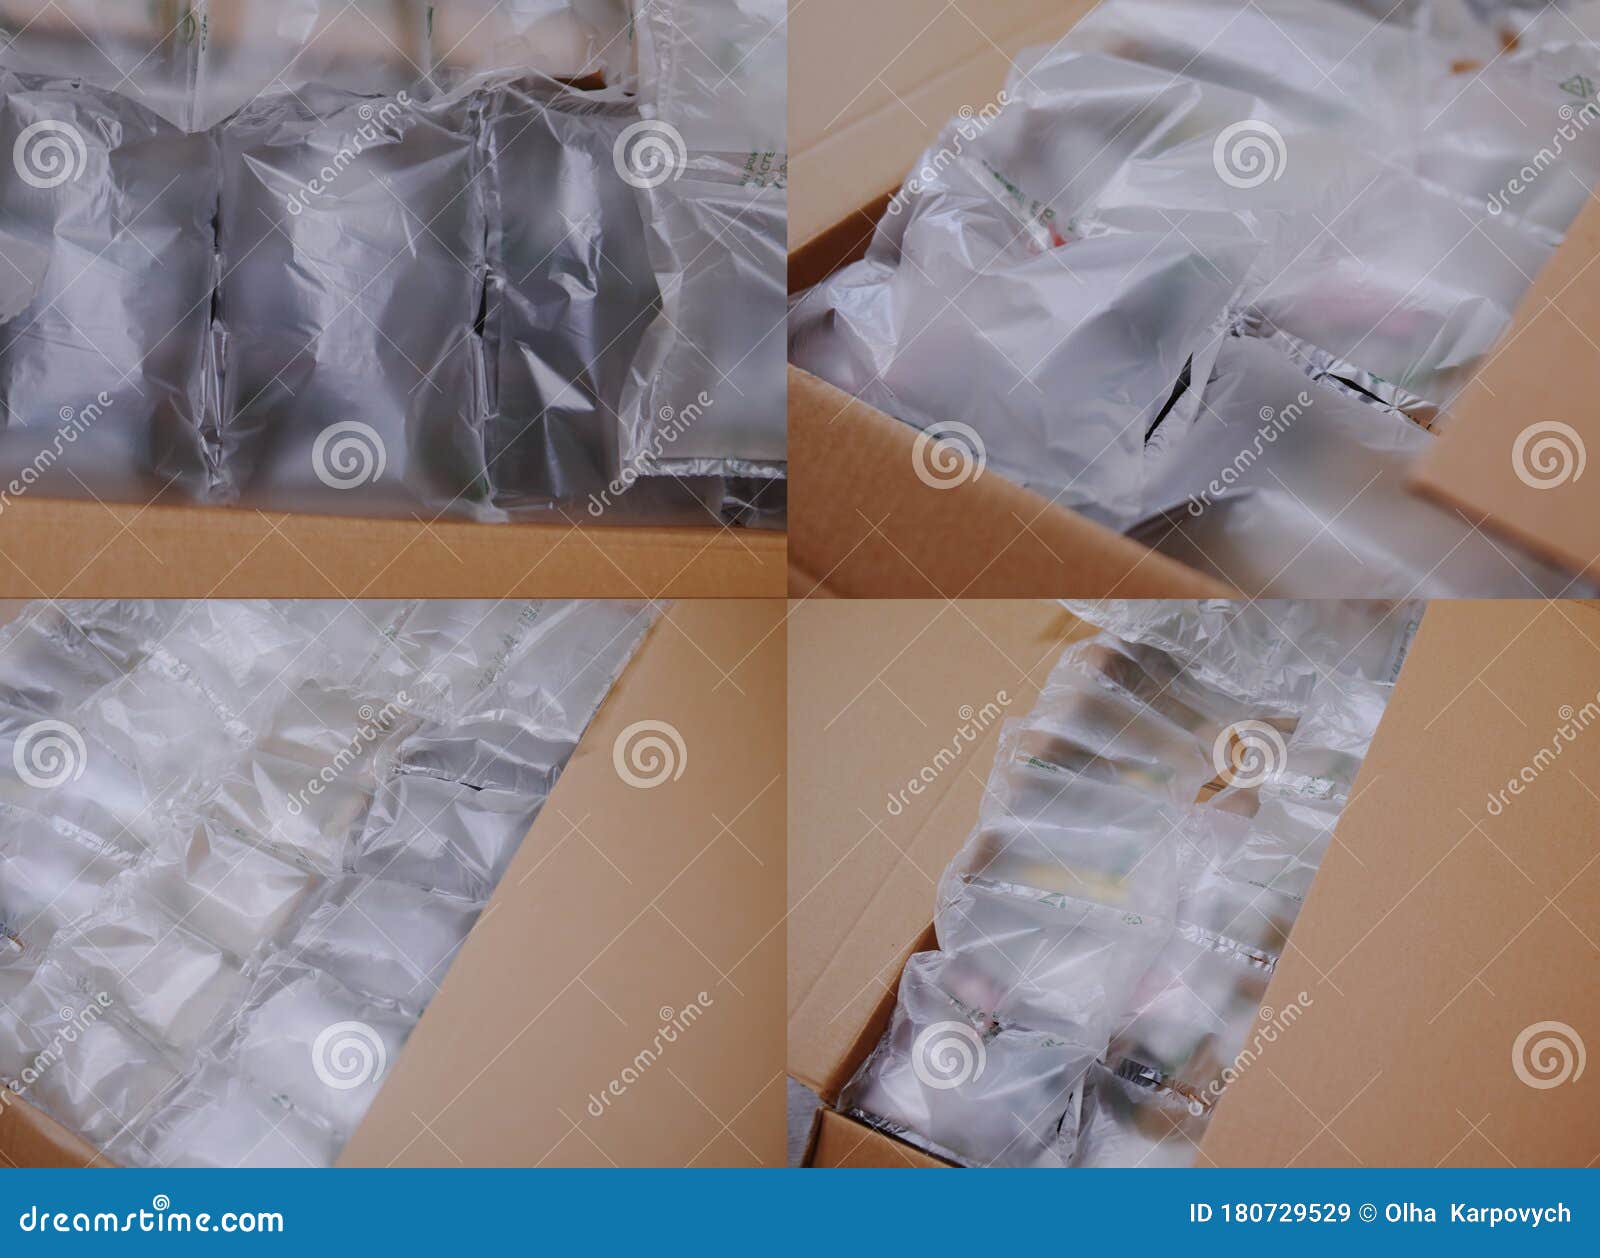 Air filled plastic bags packaging